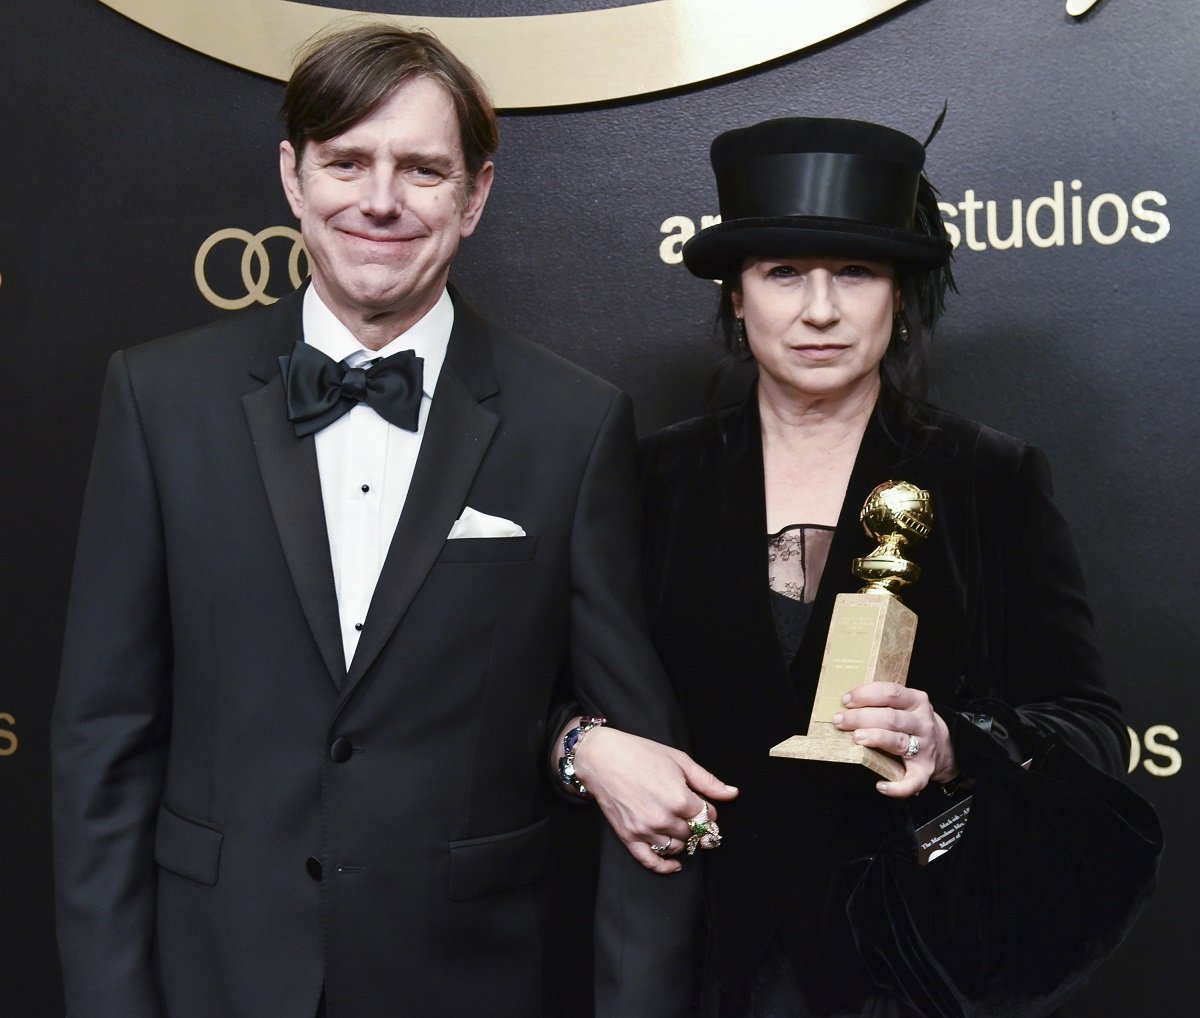 Dan Palladino and Amy Sherman-Palladino pose for a photo at the Amazon Studios Golden Globes Celebration